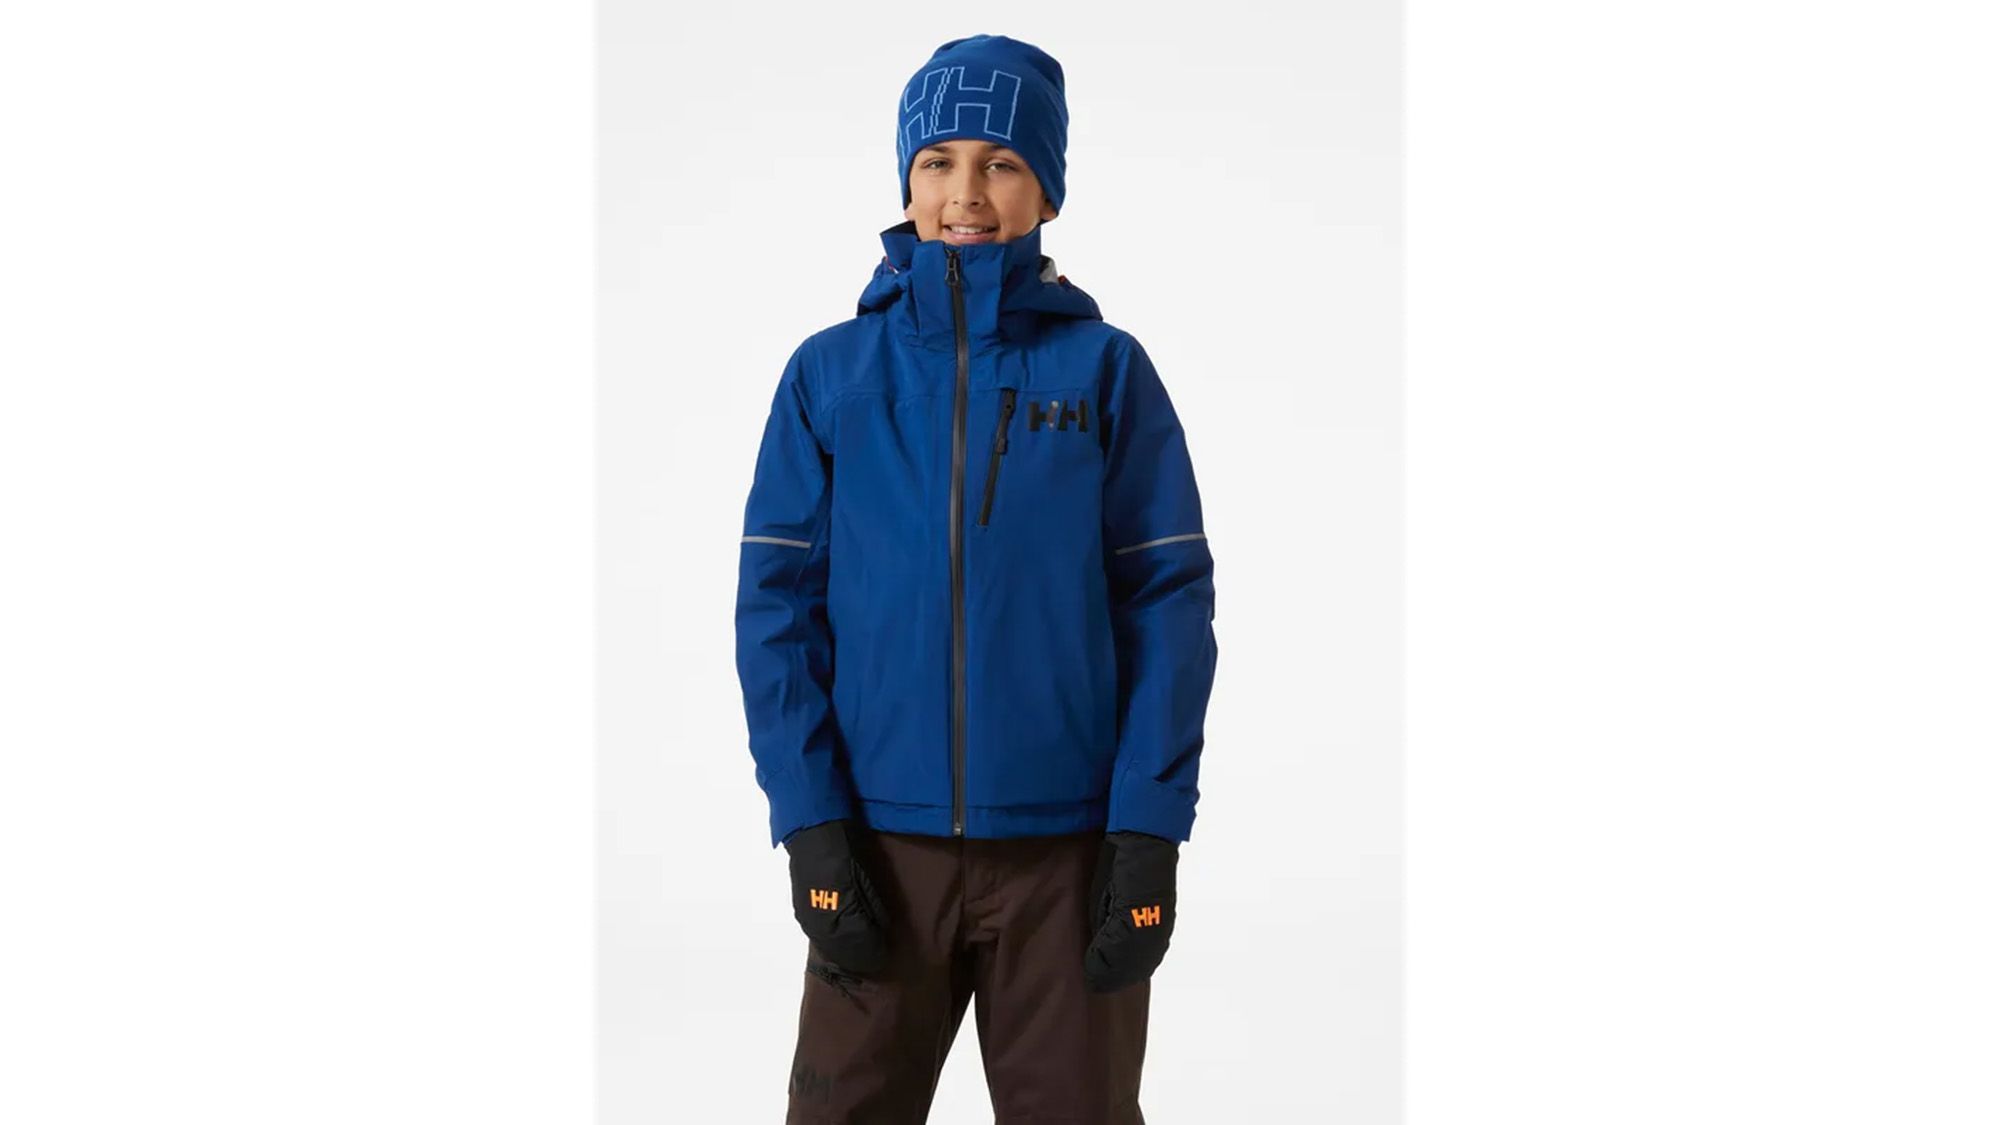 Junior Ski Jacket - Yellow nylon junior ski jacket with logo